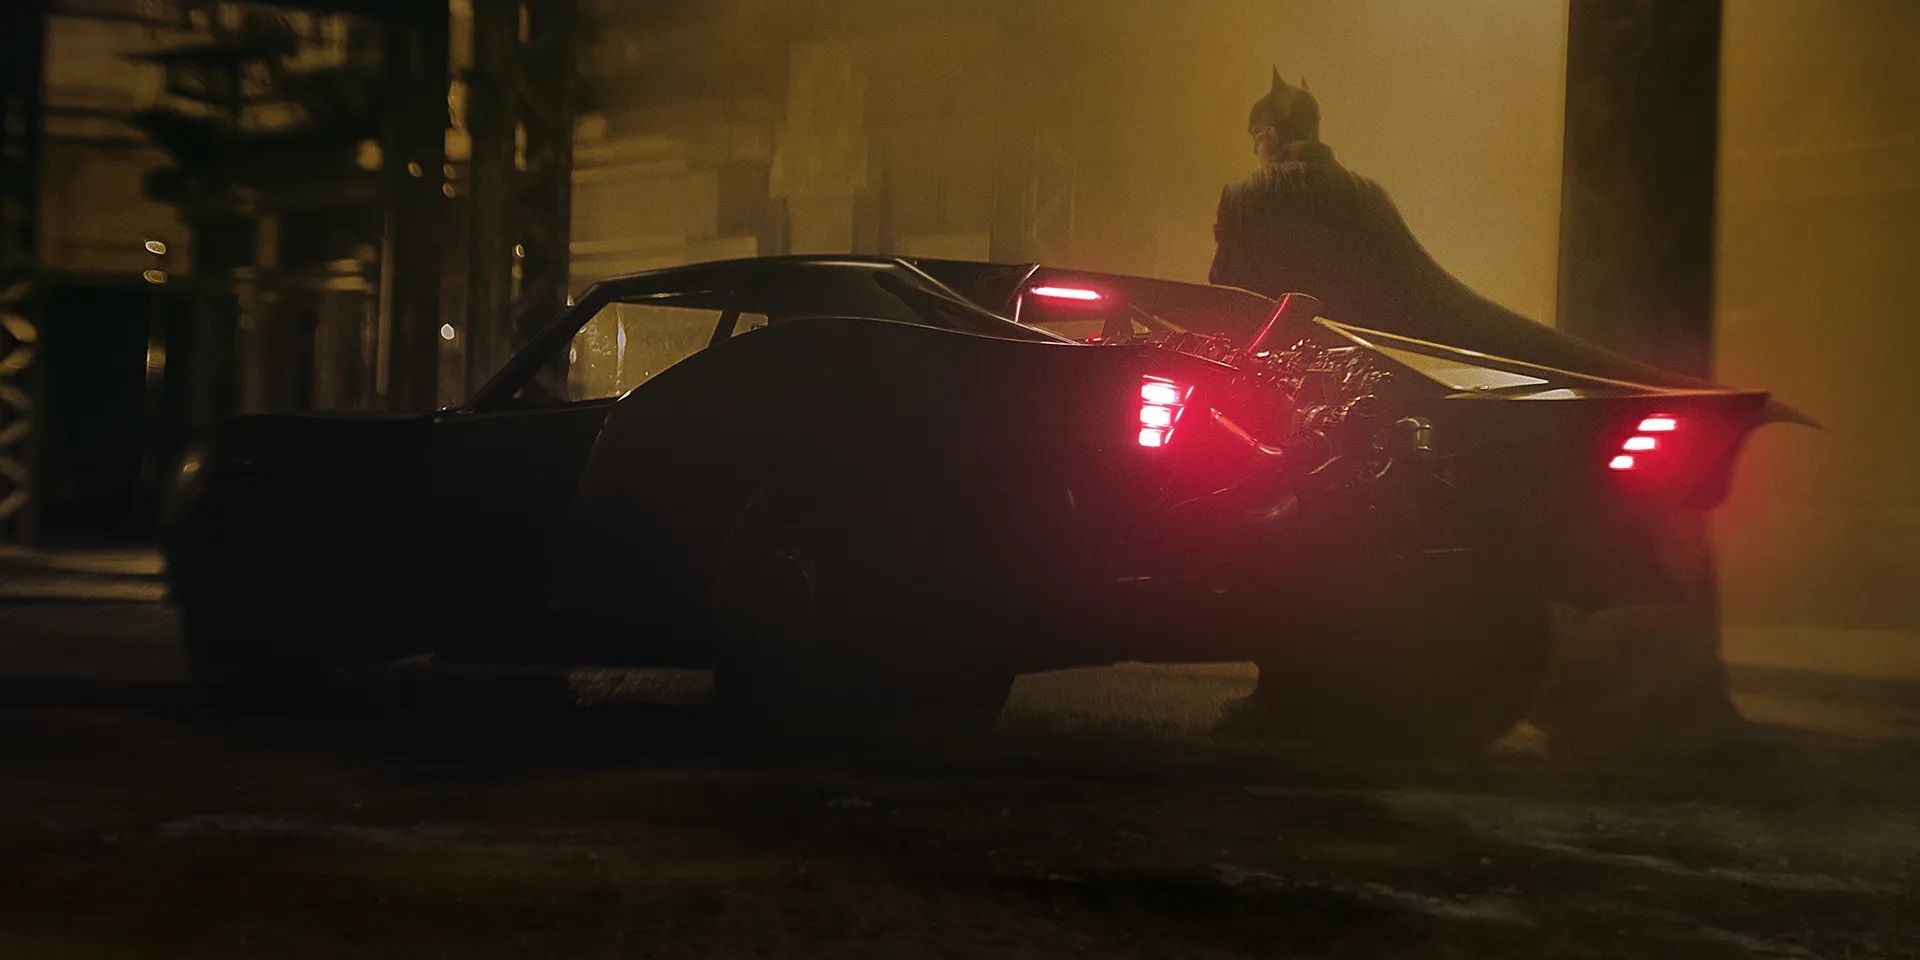 Batman standing next to the Batmobile in The Batman